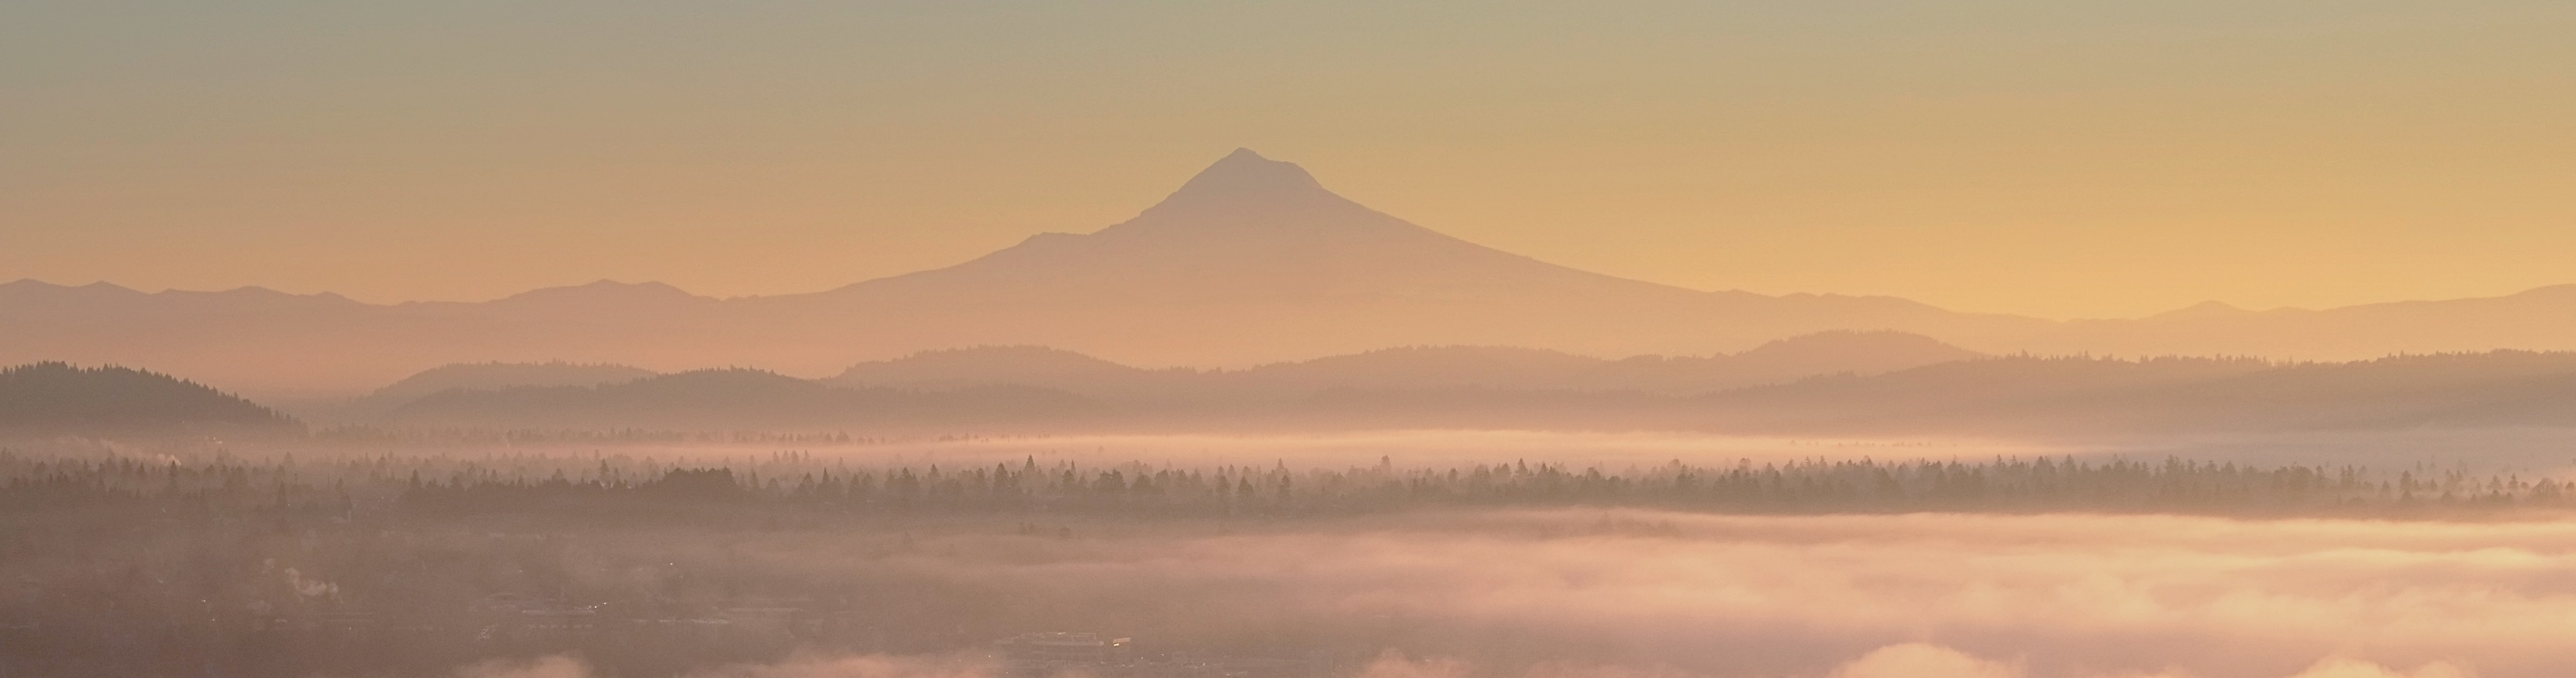 Mount Hood at sunrise with fog